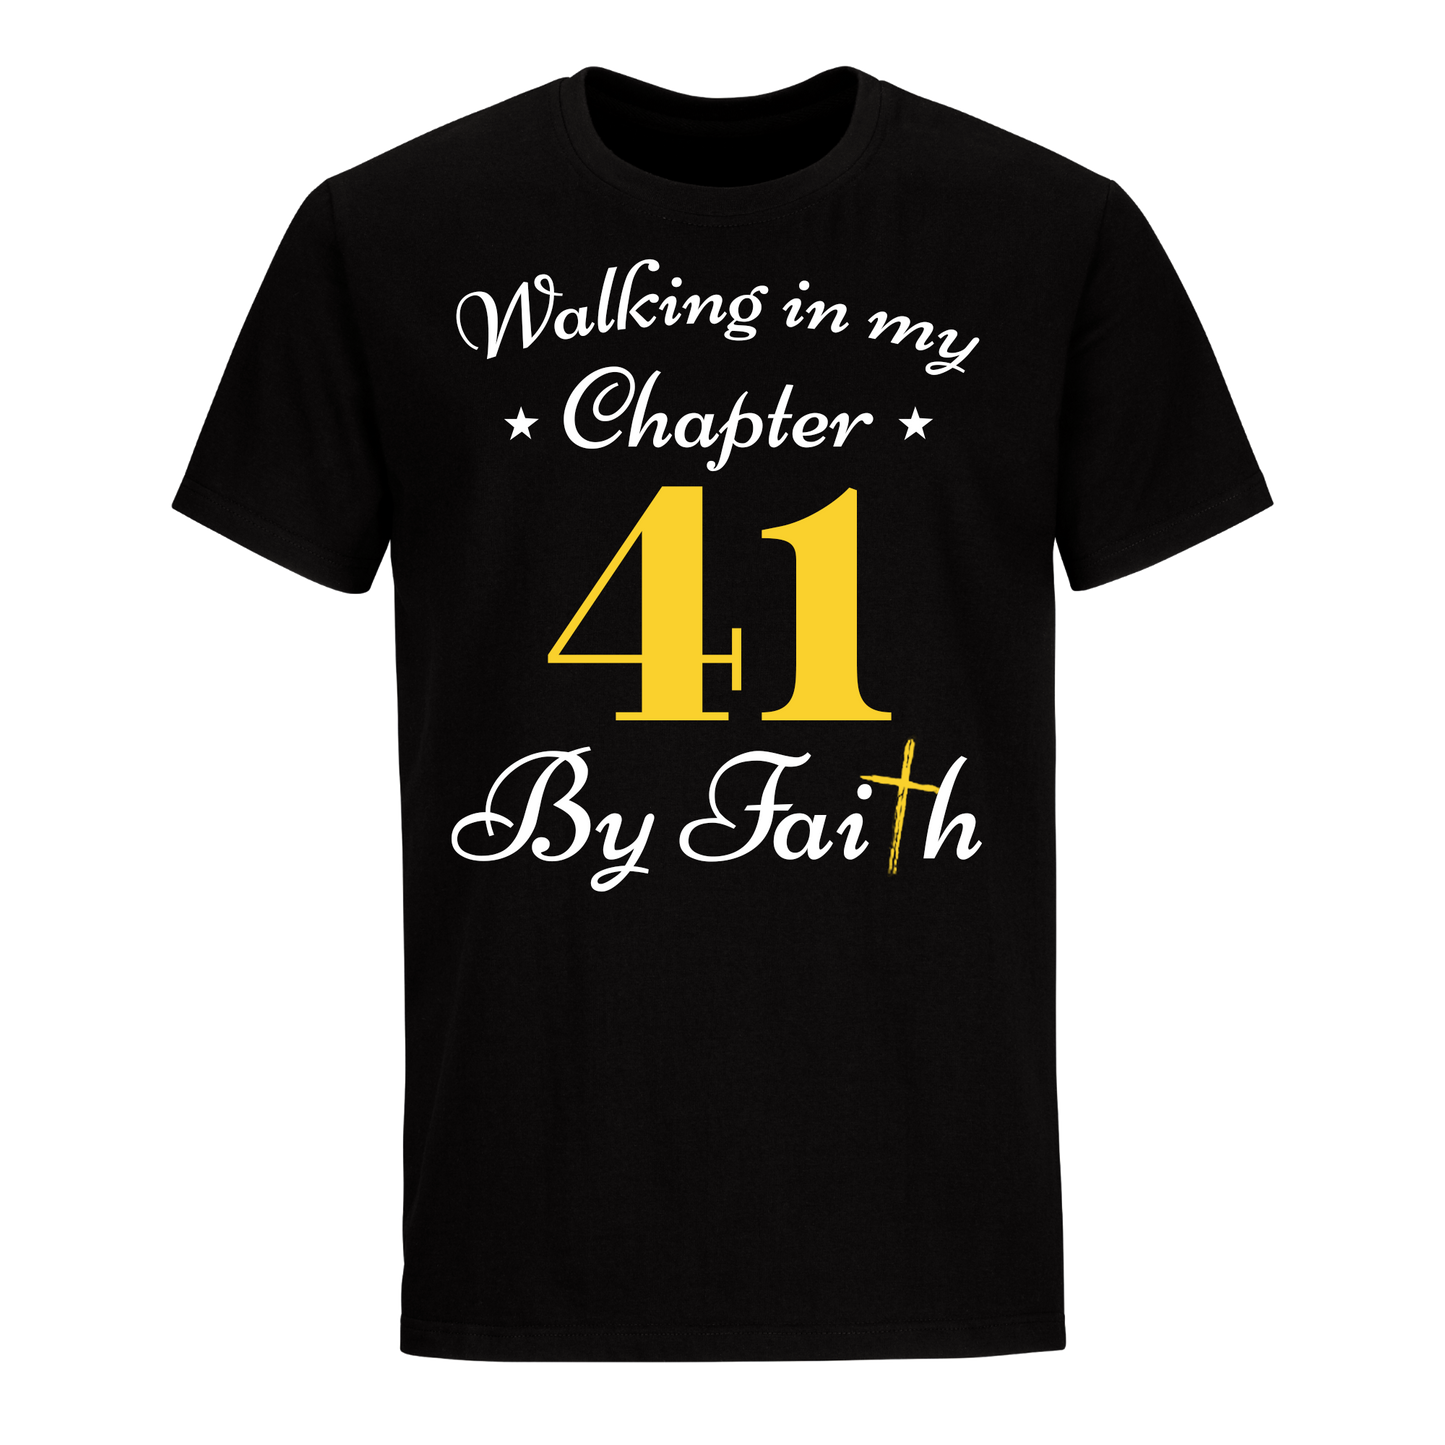 WALKING CHAPTER 41 BY FAITH UNISEX SHIRT